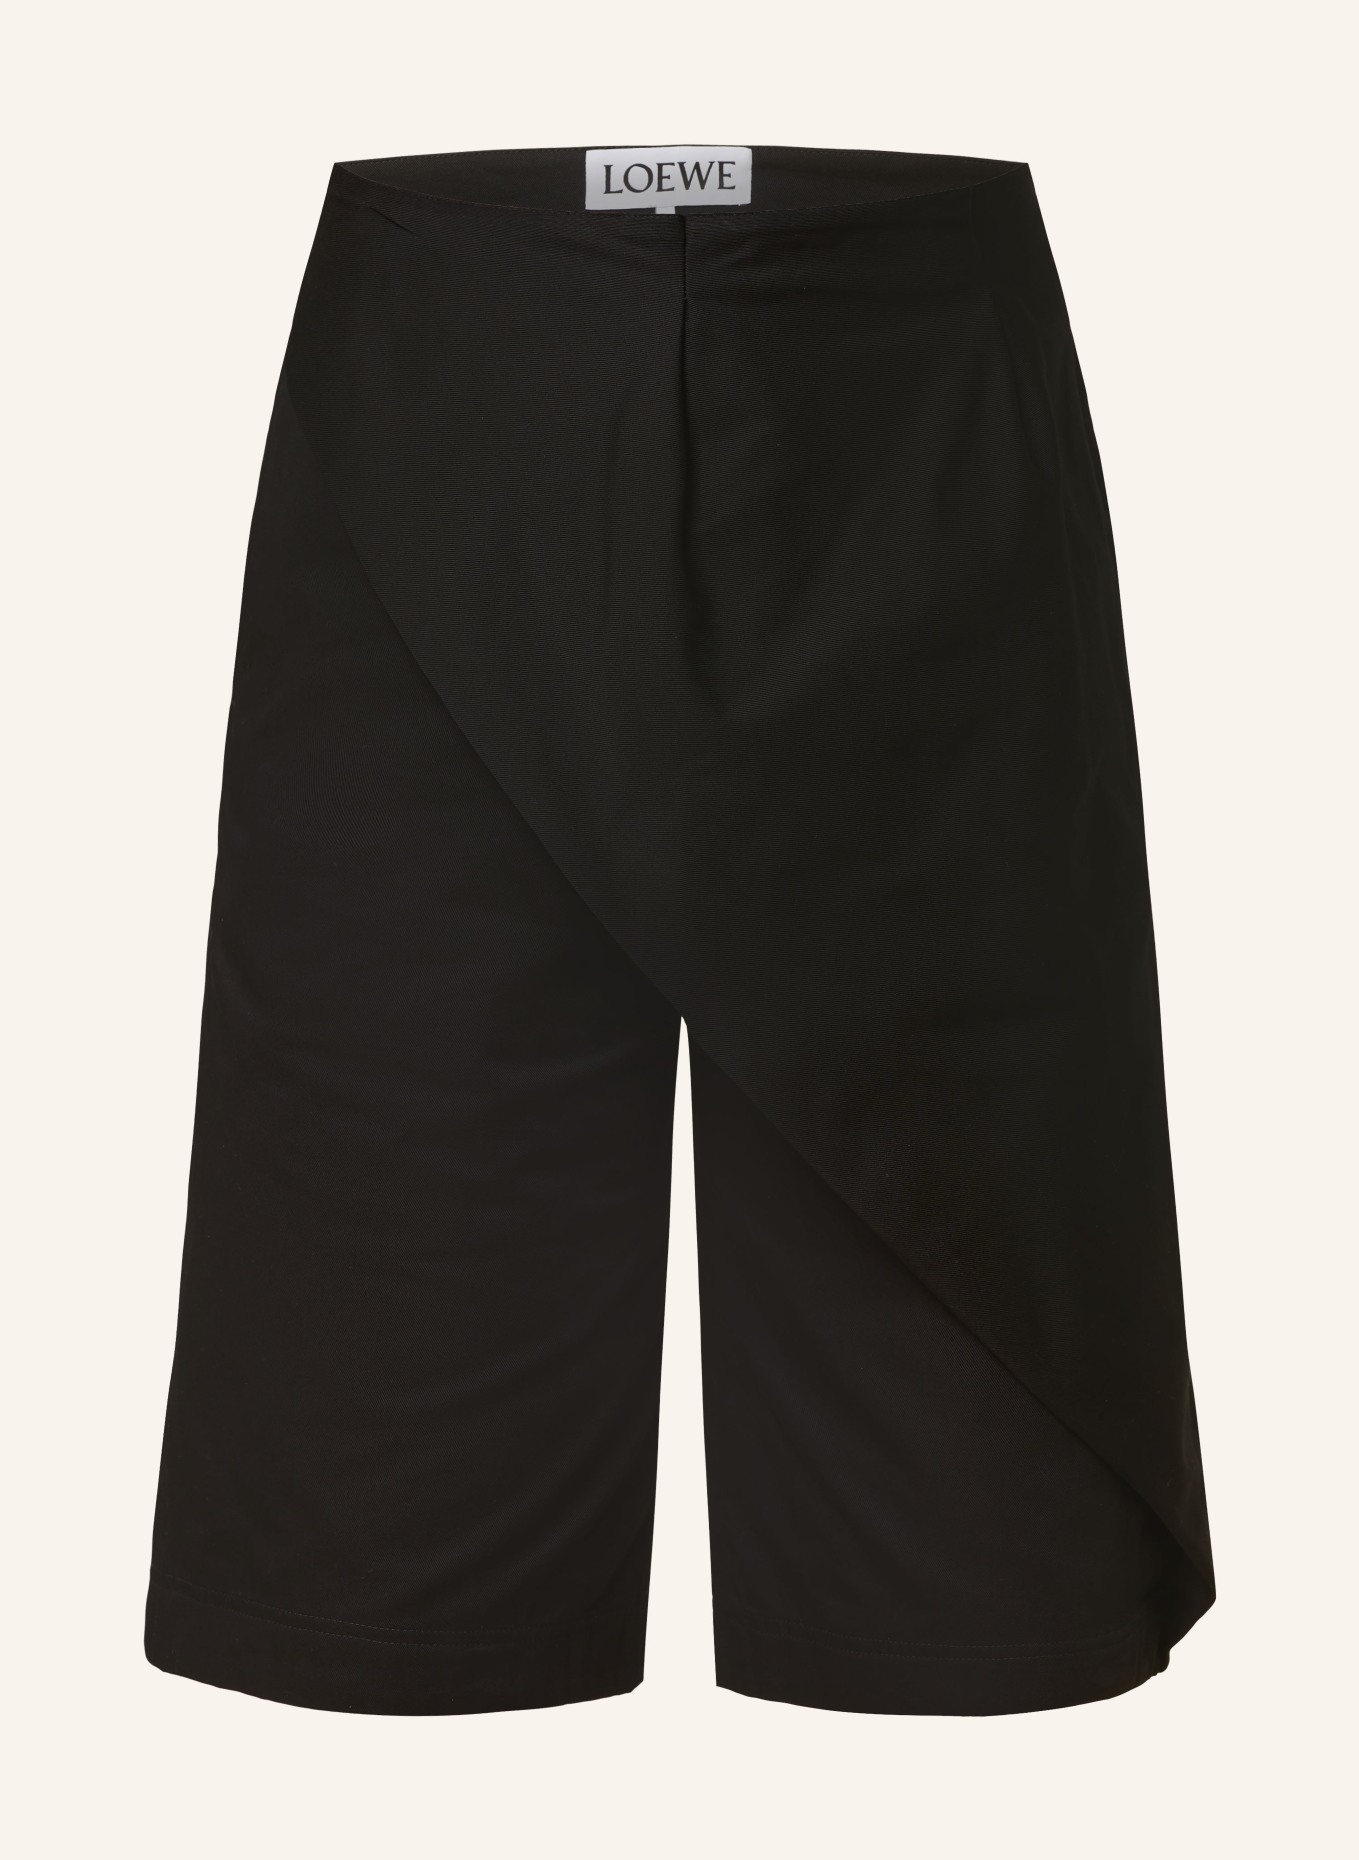 LOEWE Shorts, Farbe: SCHWARZ (Bild 1)